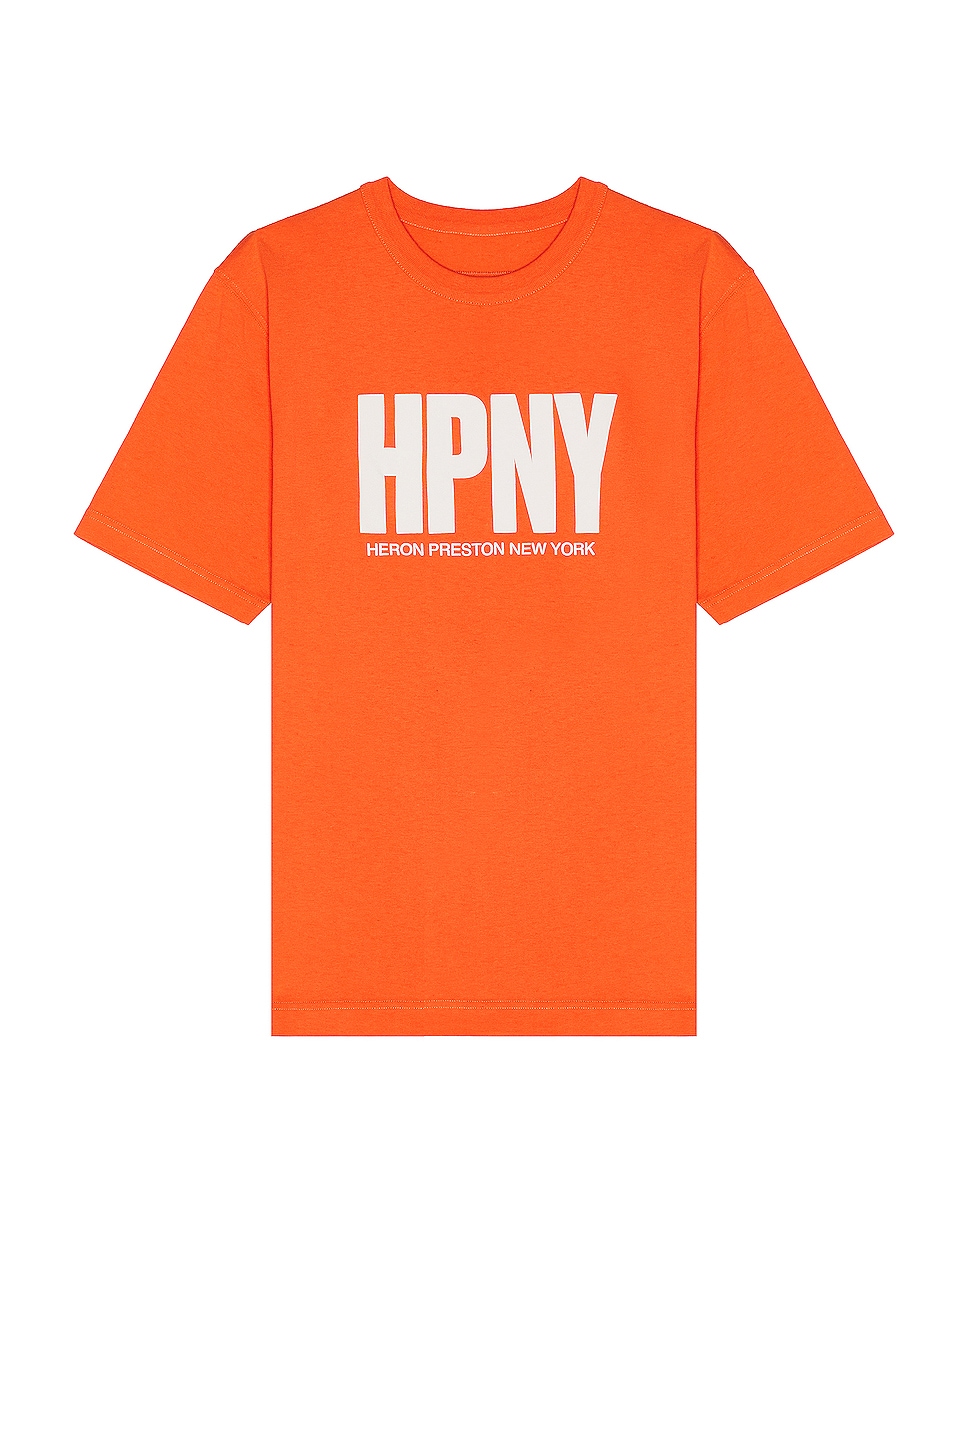 Футболка Heron Preston Hpny, оранжевый футболка heron preston hpny черный белый